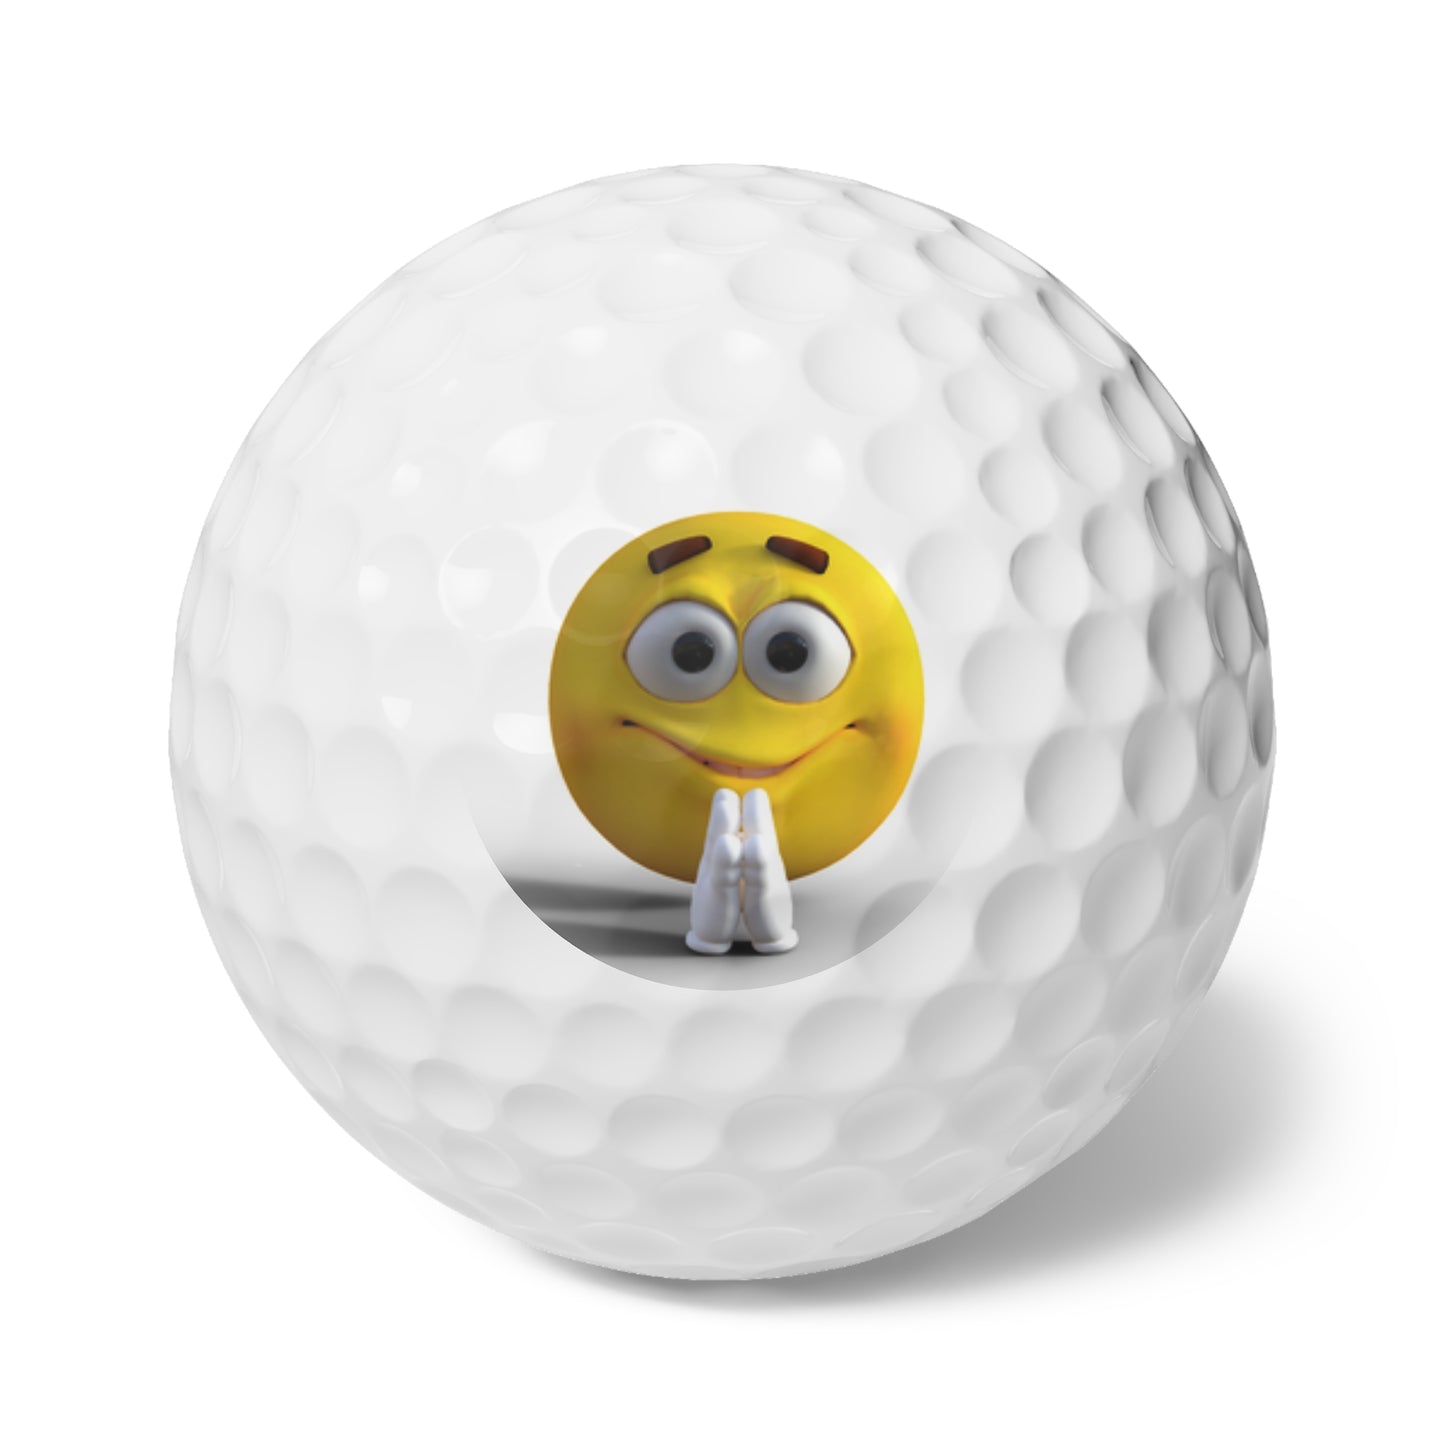 Emoticon Golf Balls (2), 6pcs